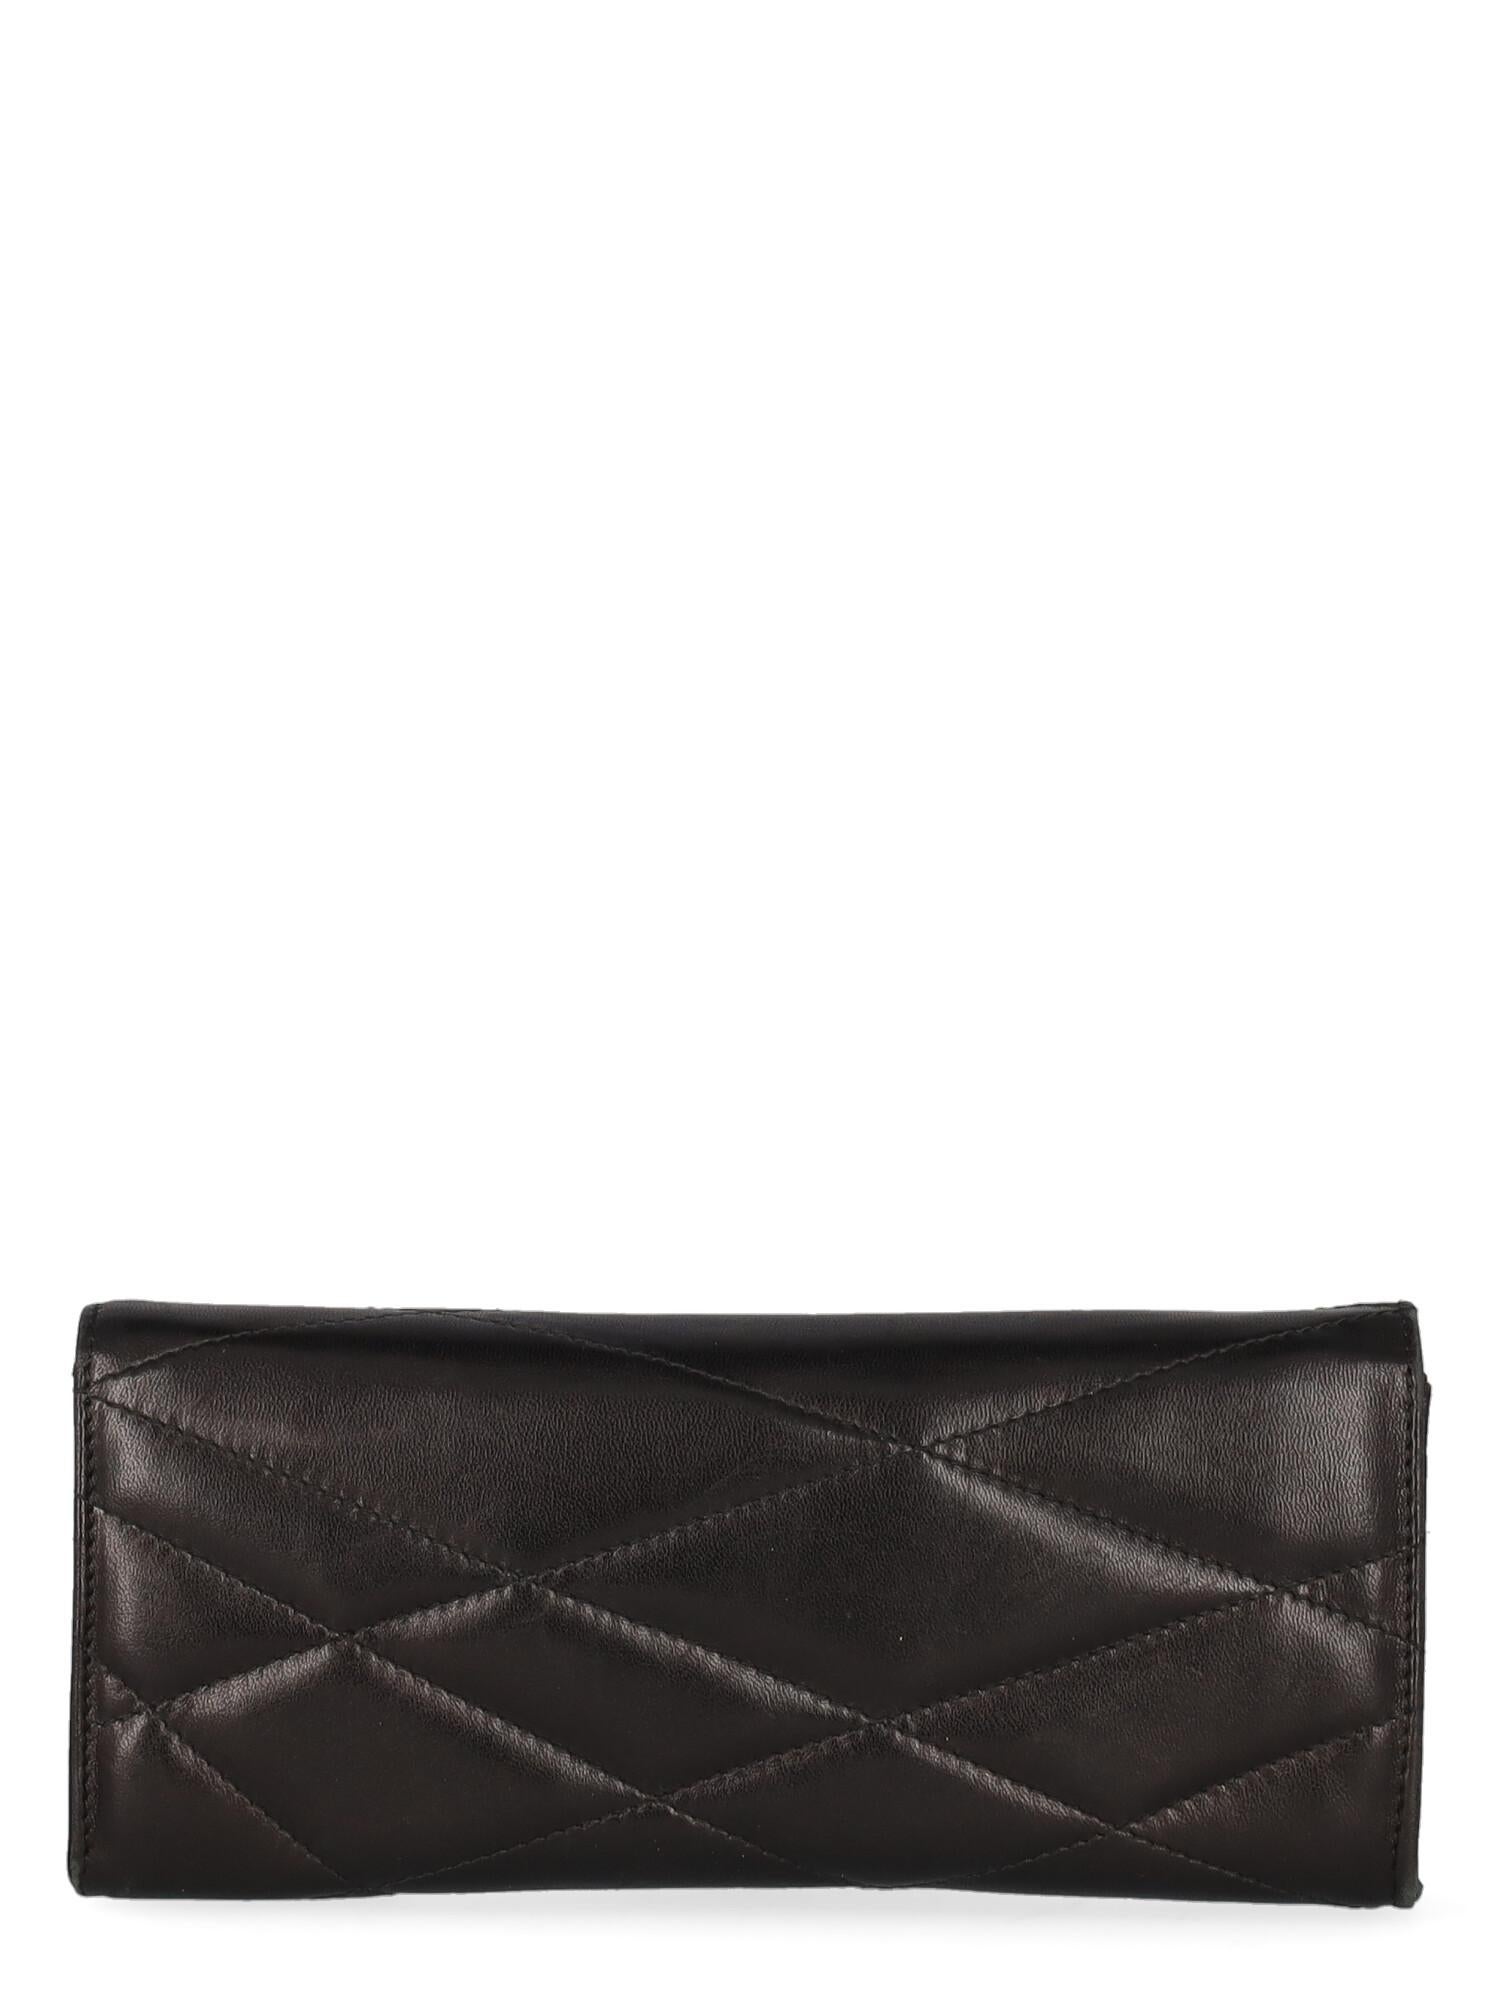 Women's Corto Moltedo Women Handbags Black Leather  For Sale